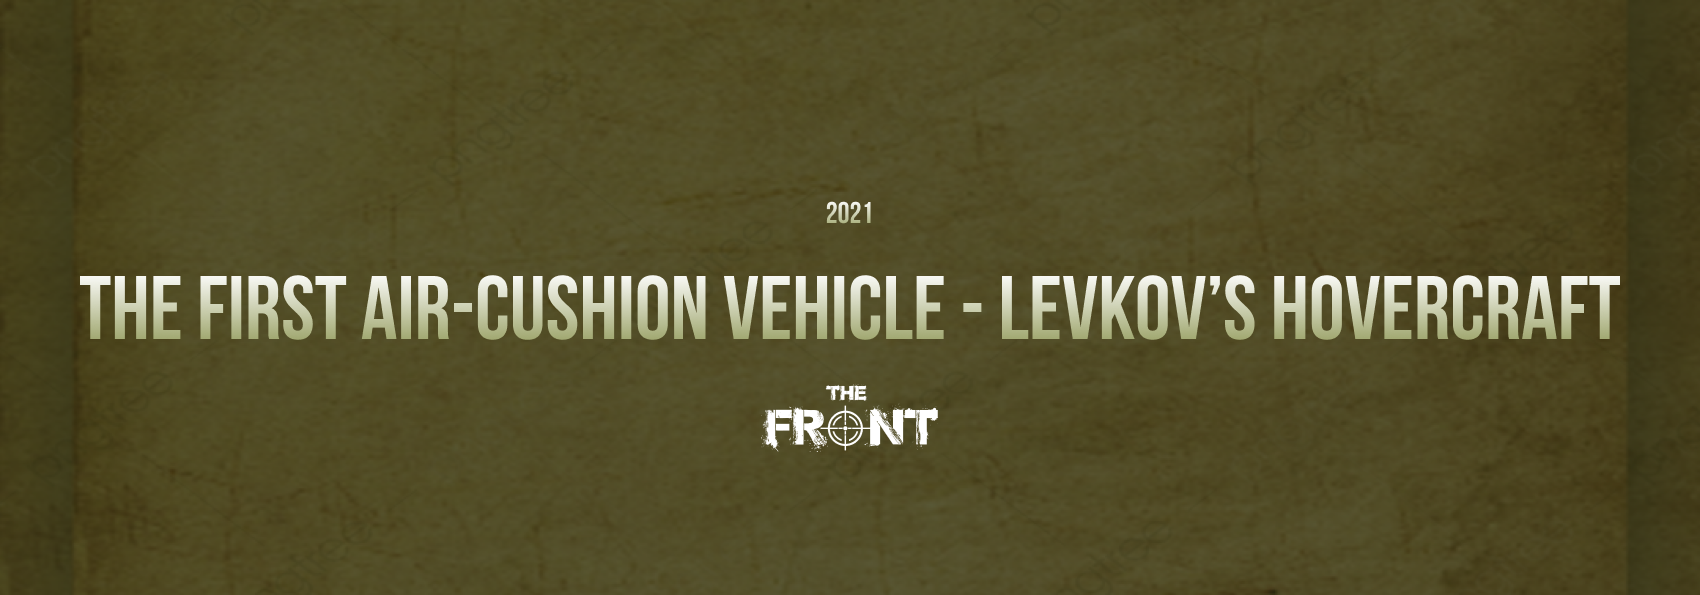 The First Air-cushion Vehicle - Levkov’s Hovercraft